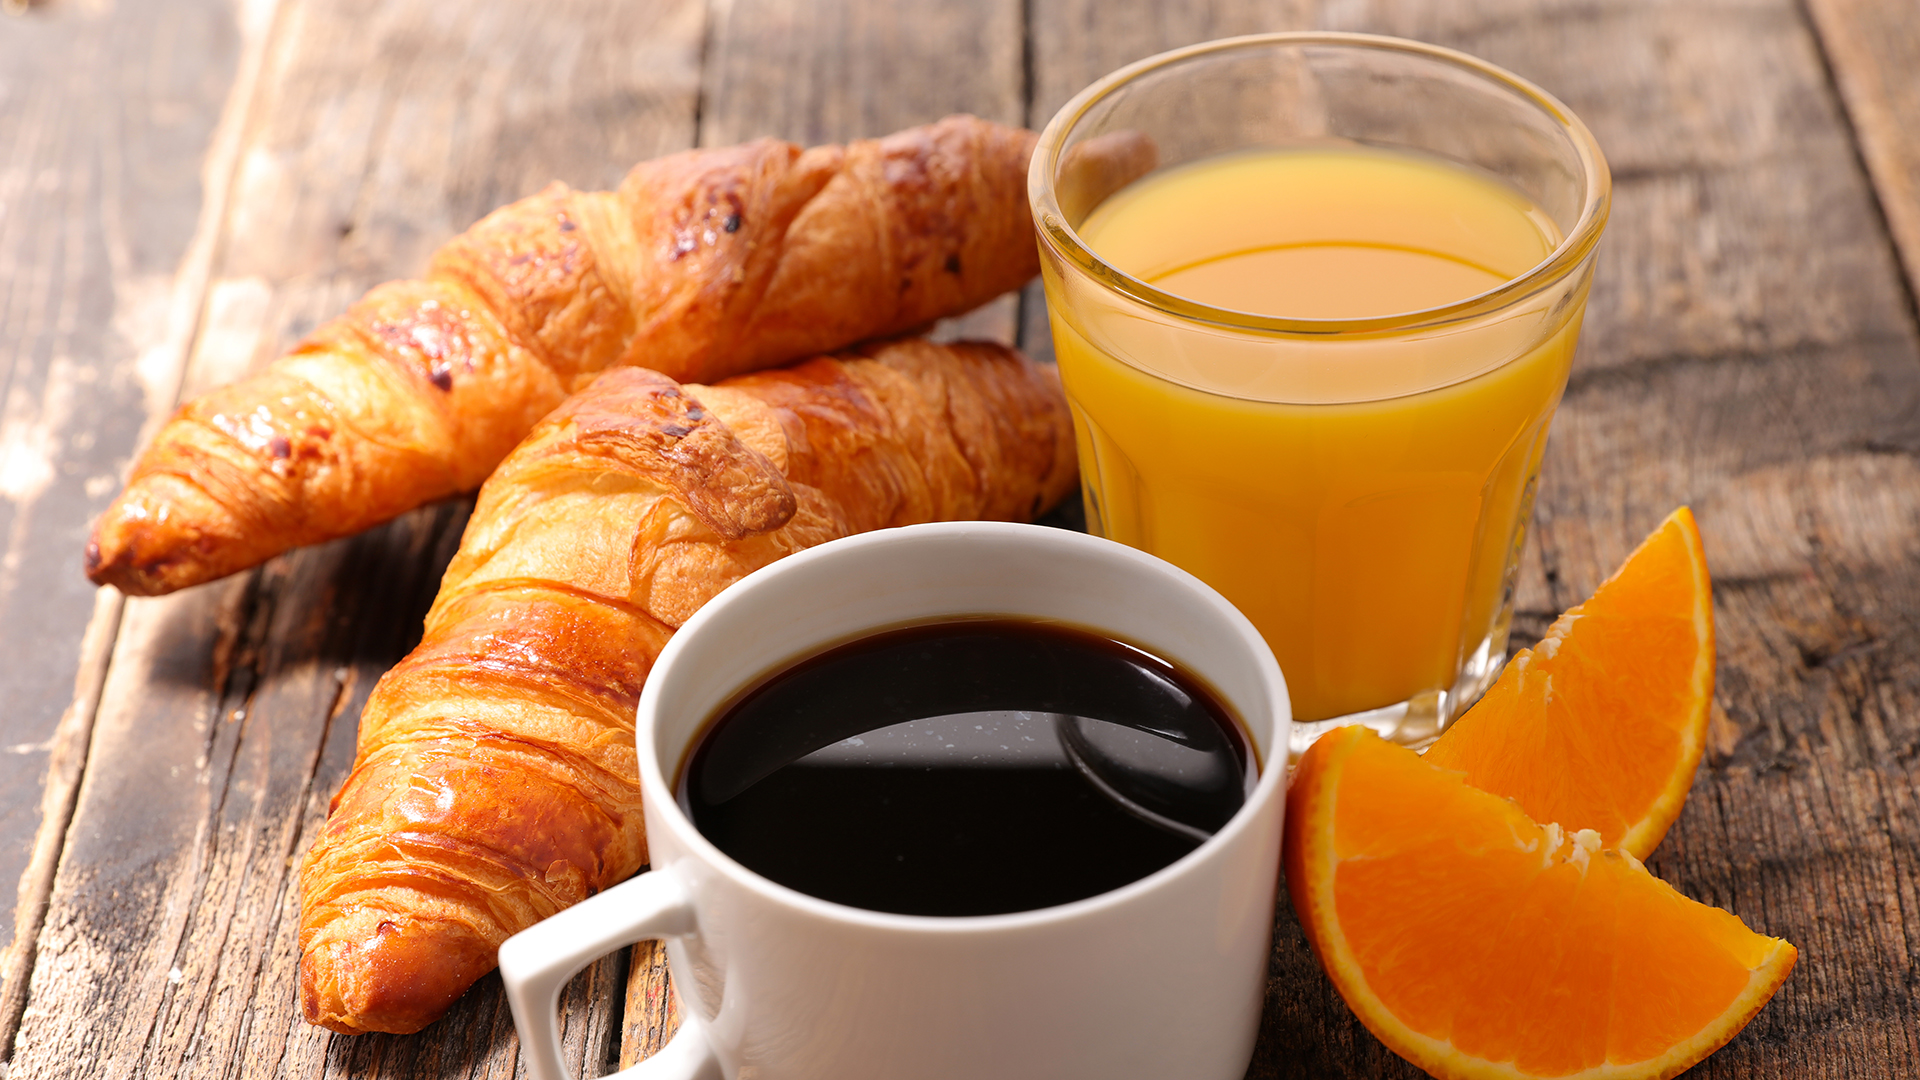 Ashton Kutcher Explains Why He Puts Orange Juice in His Coffee